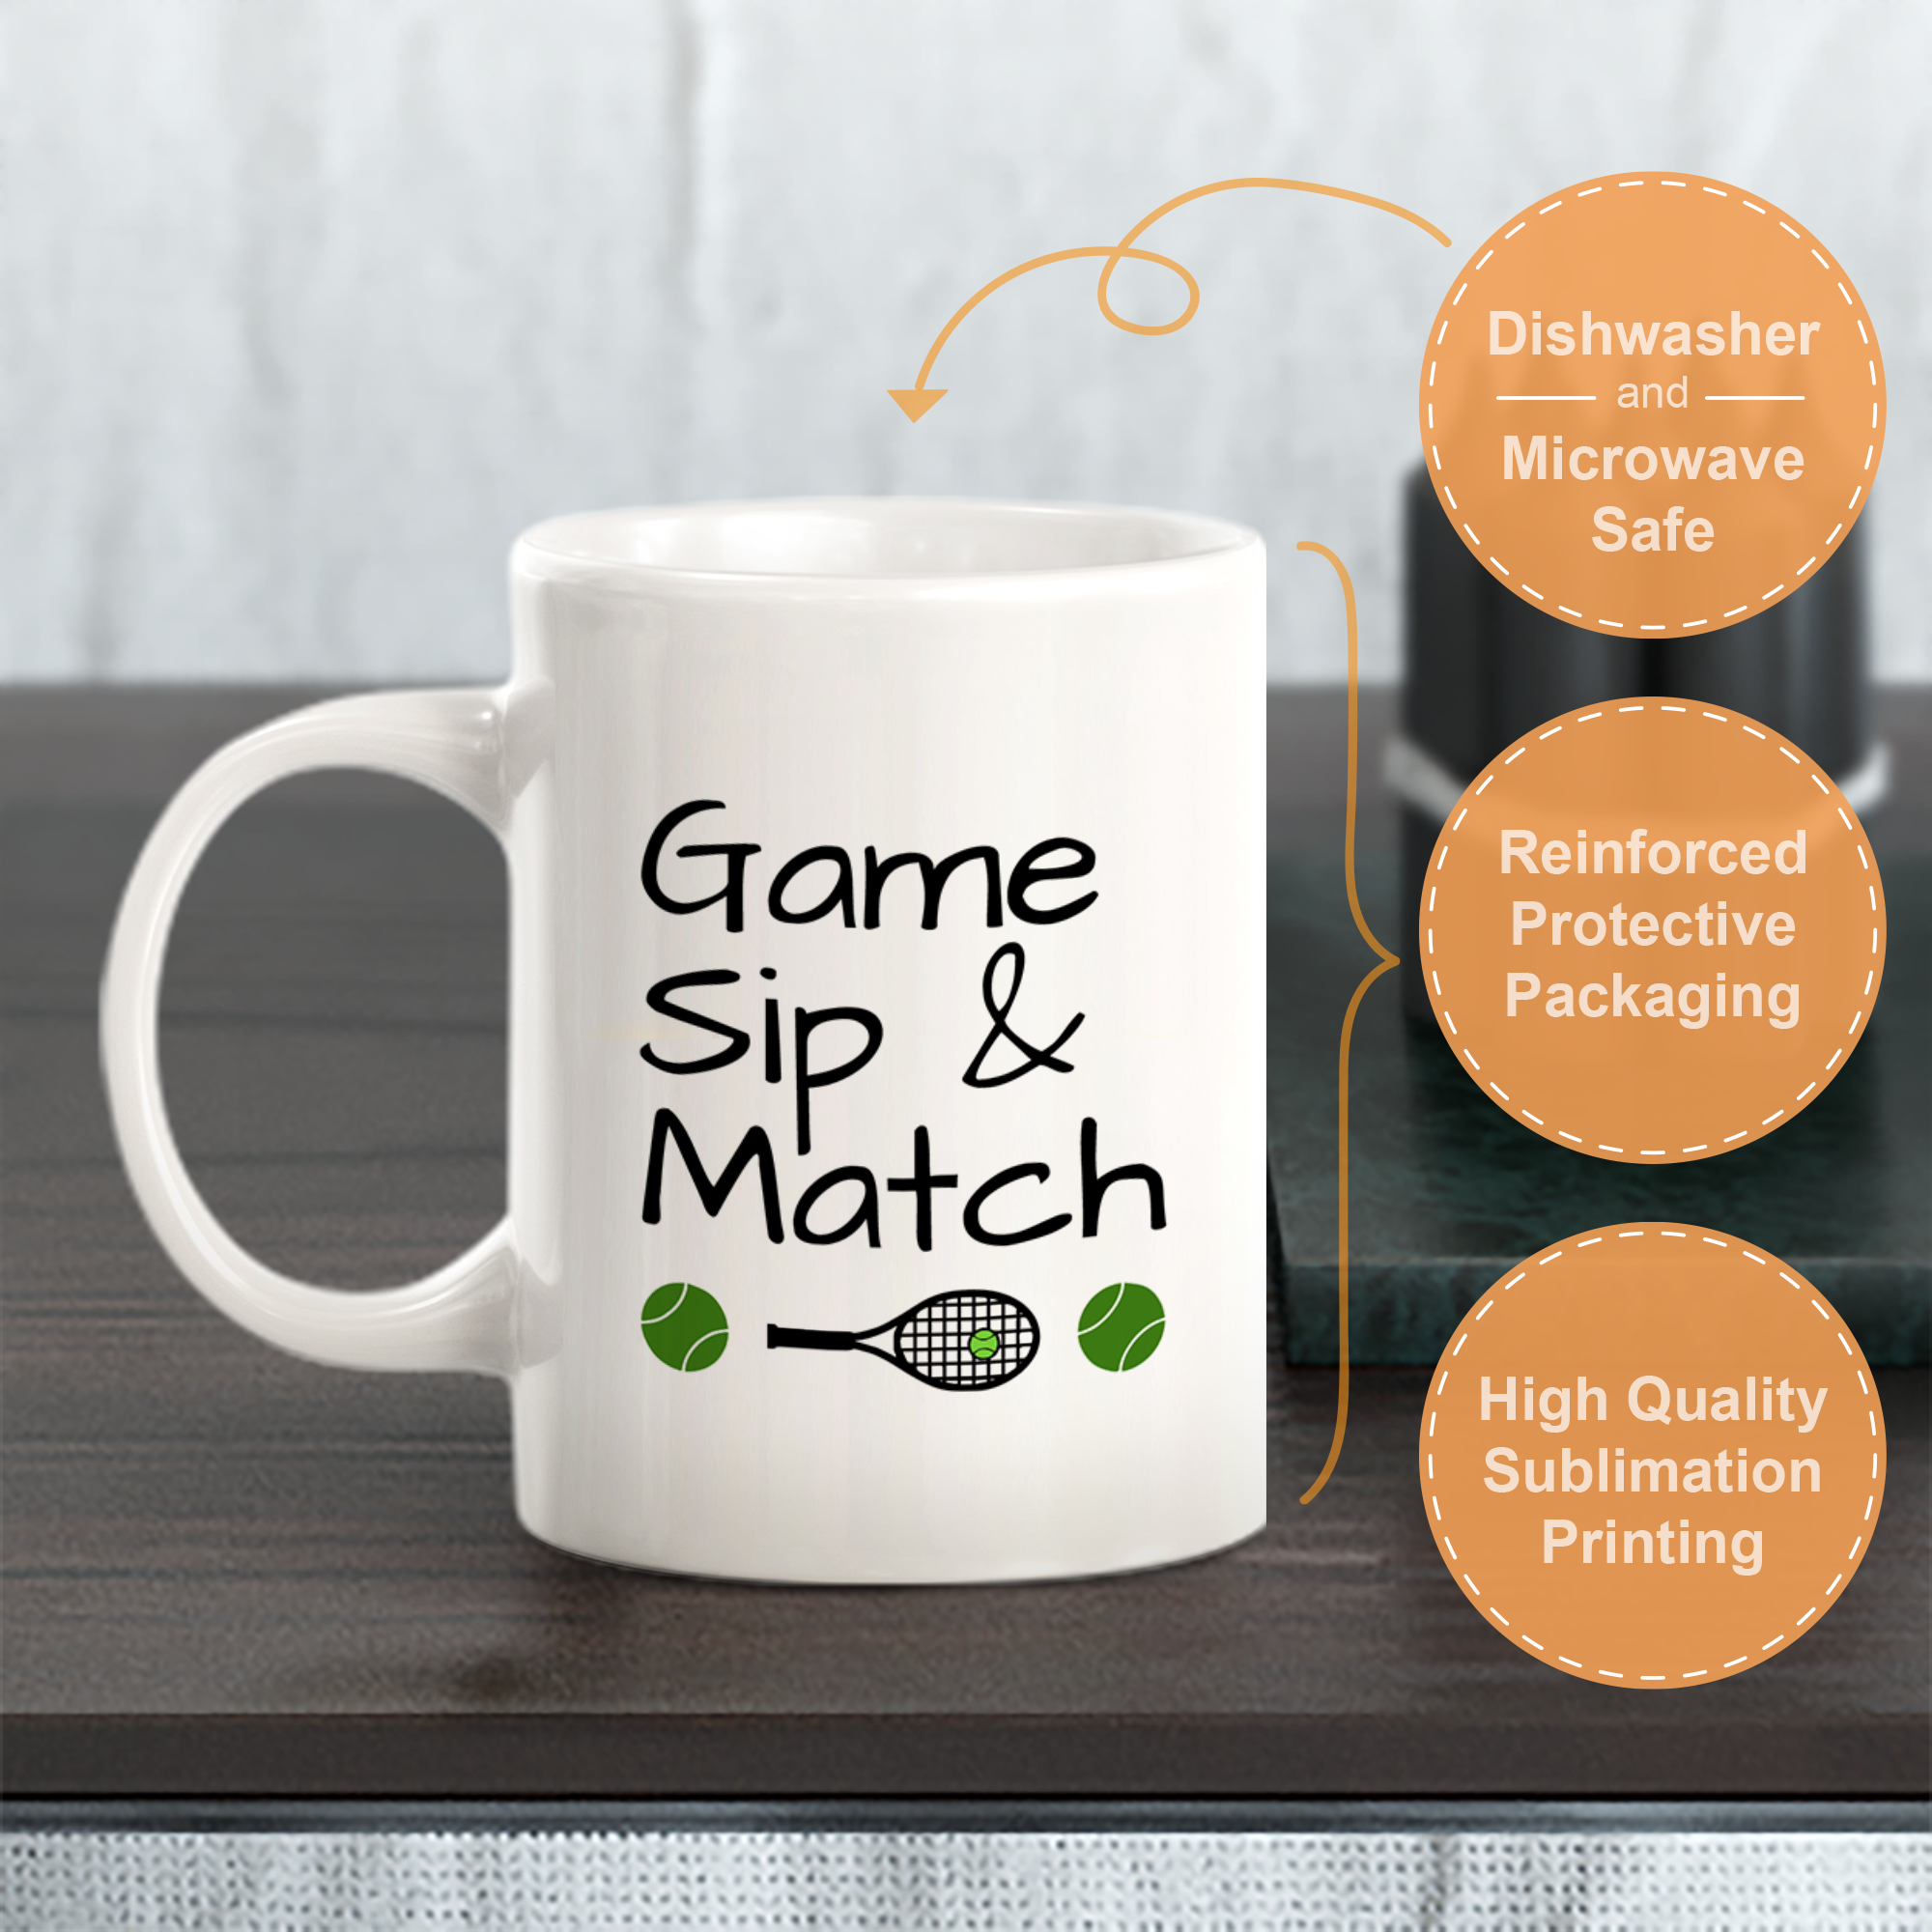 Game, Sip & Match, Novelty Coffee Mug Drinkware Gift